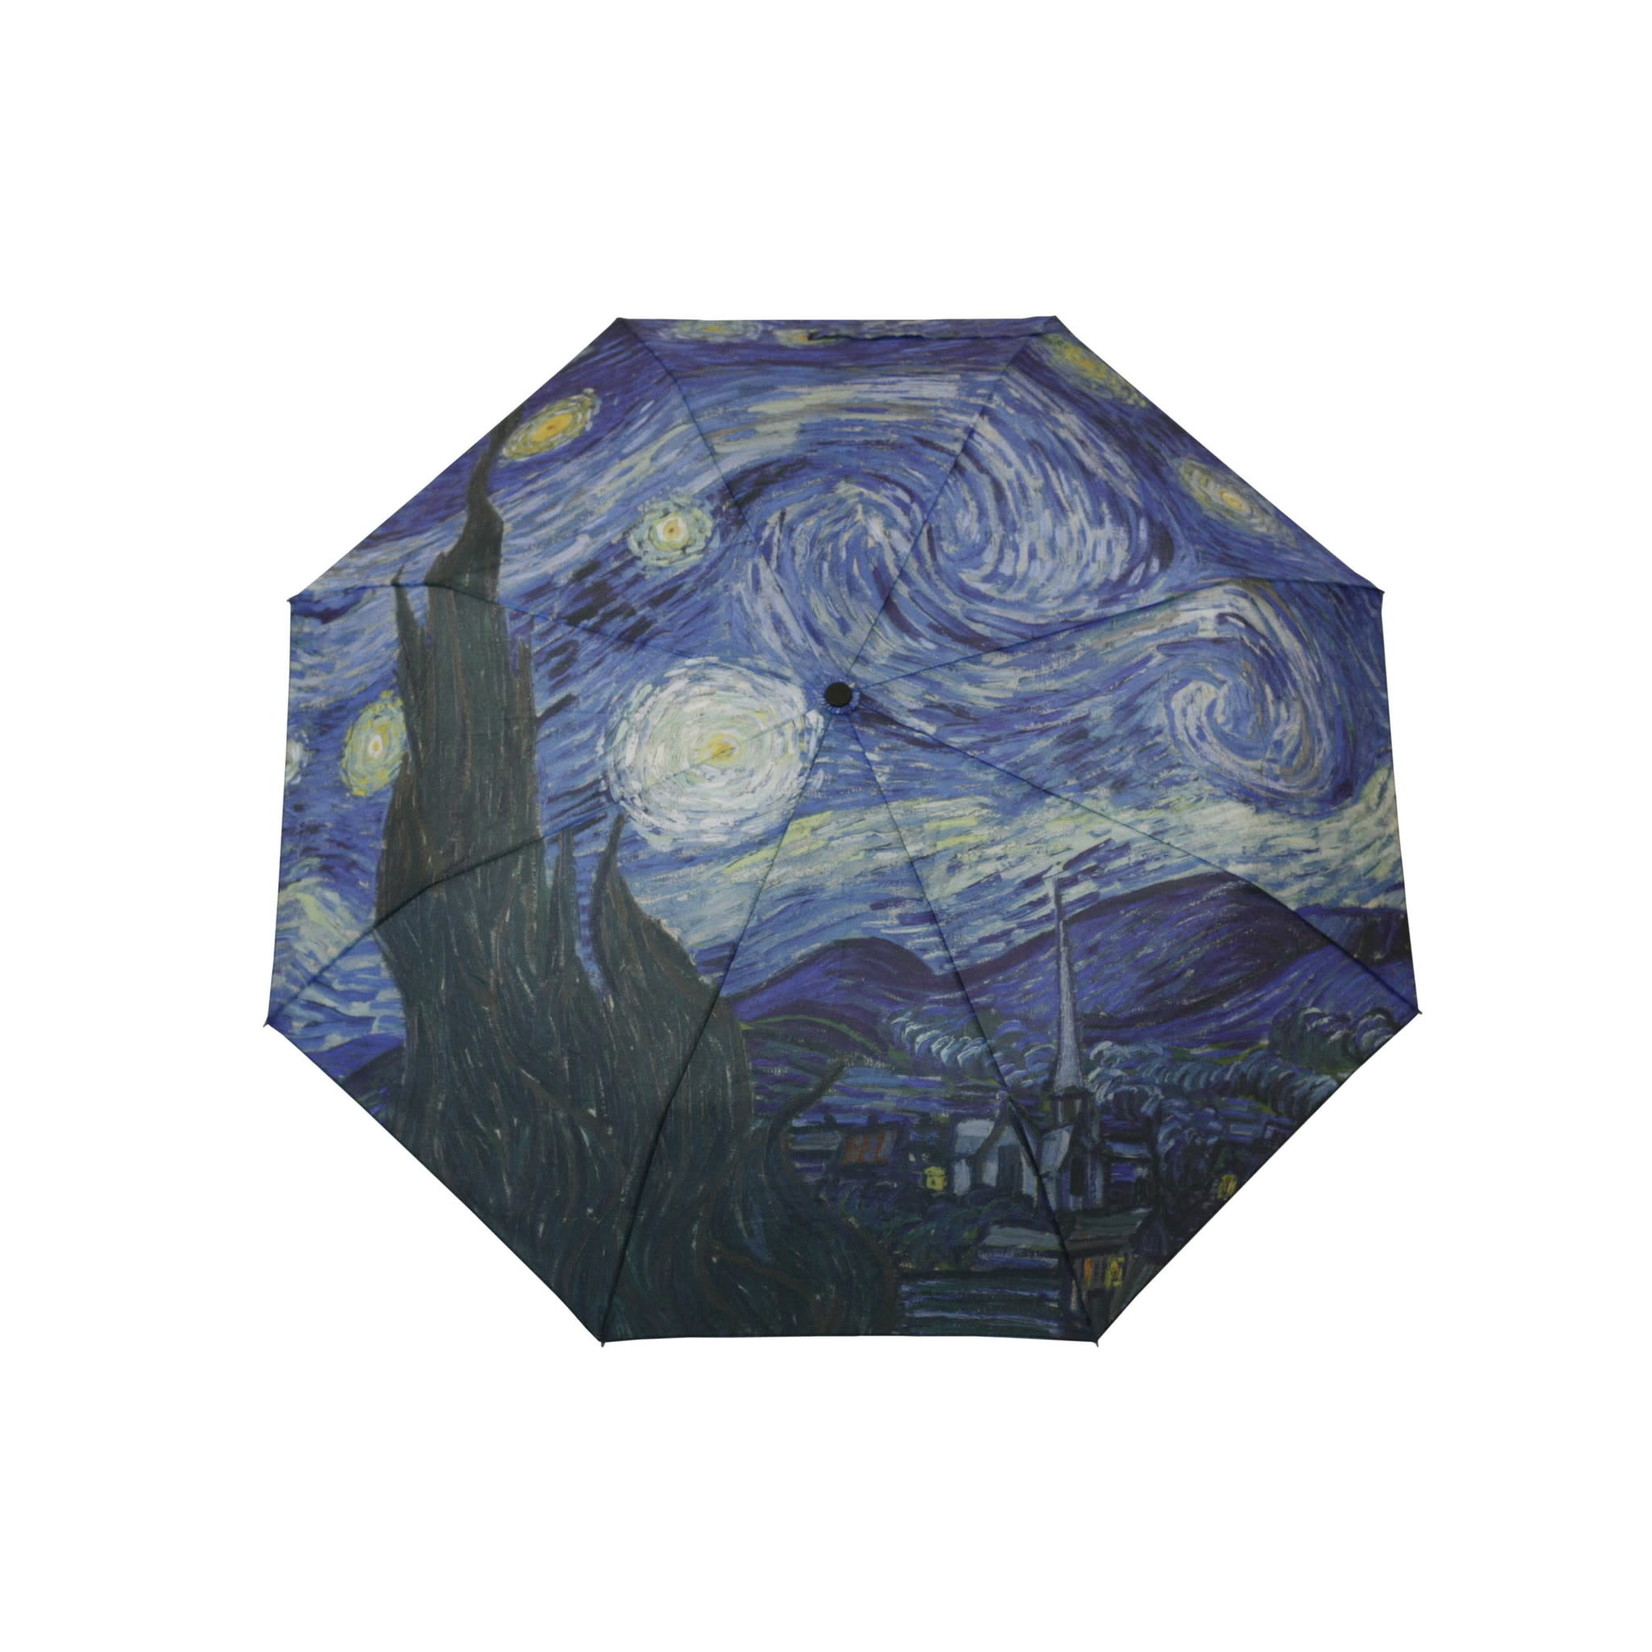 Ecozz Starry Night - Vincent van Gogh 100% recycled PET